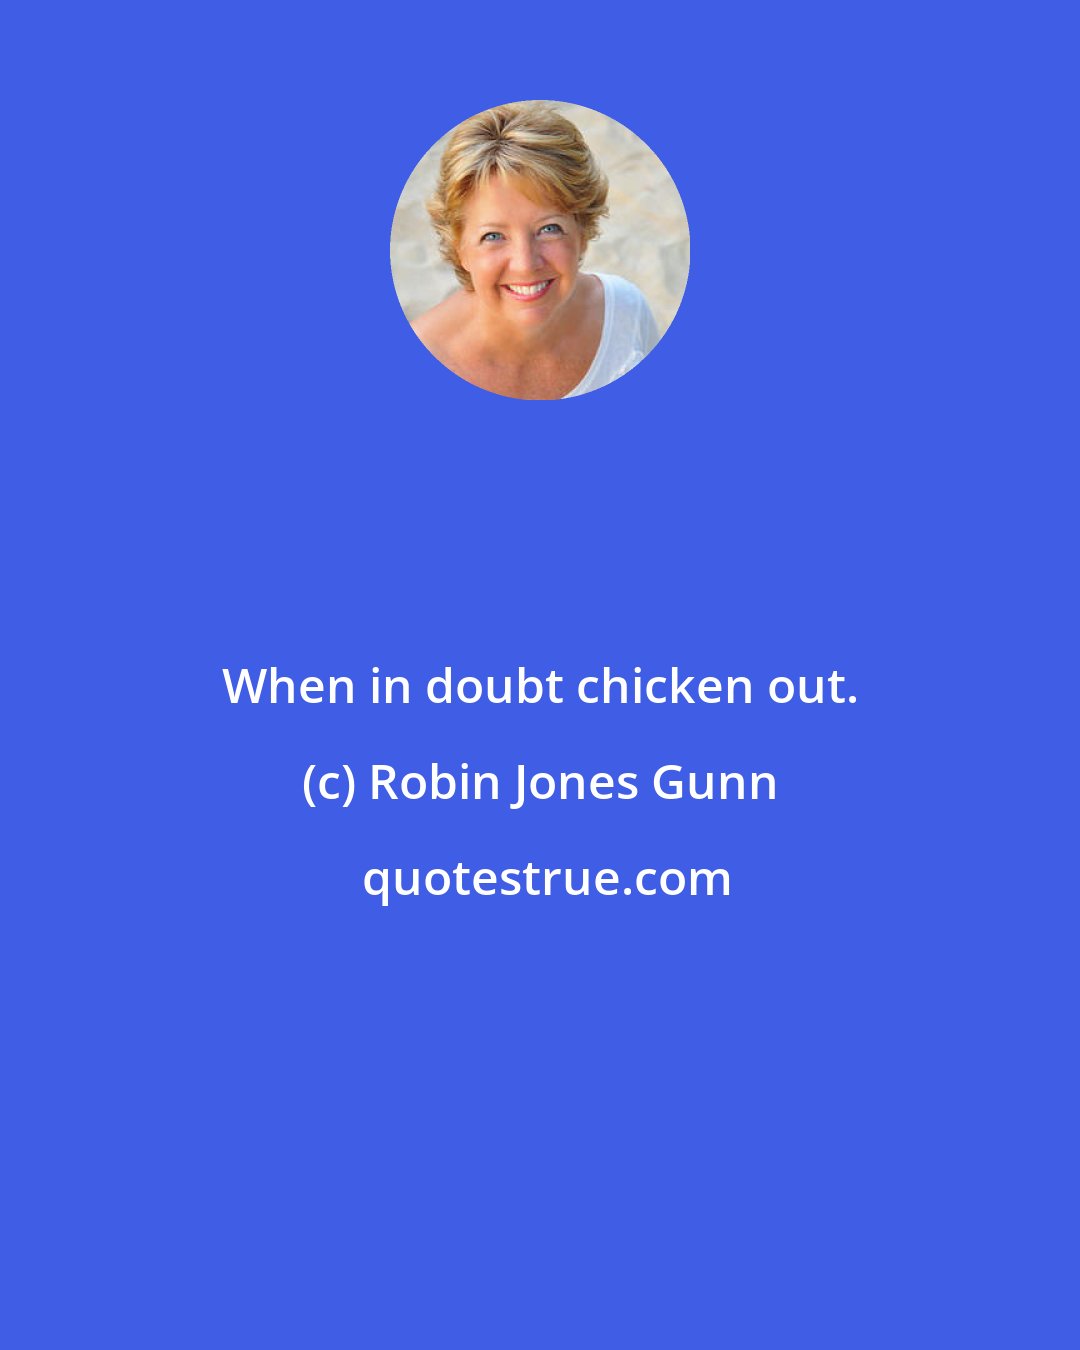 Robin Jones Gunn: When in doubt chicken out.